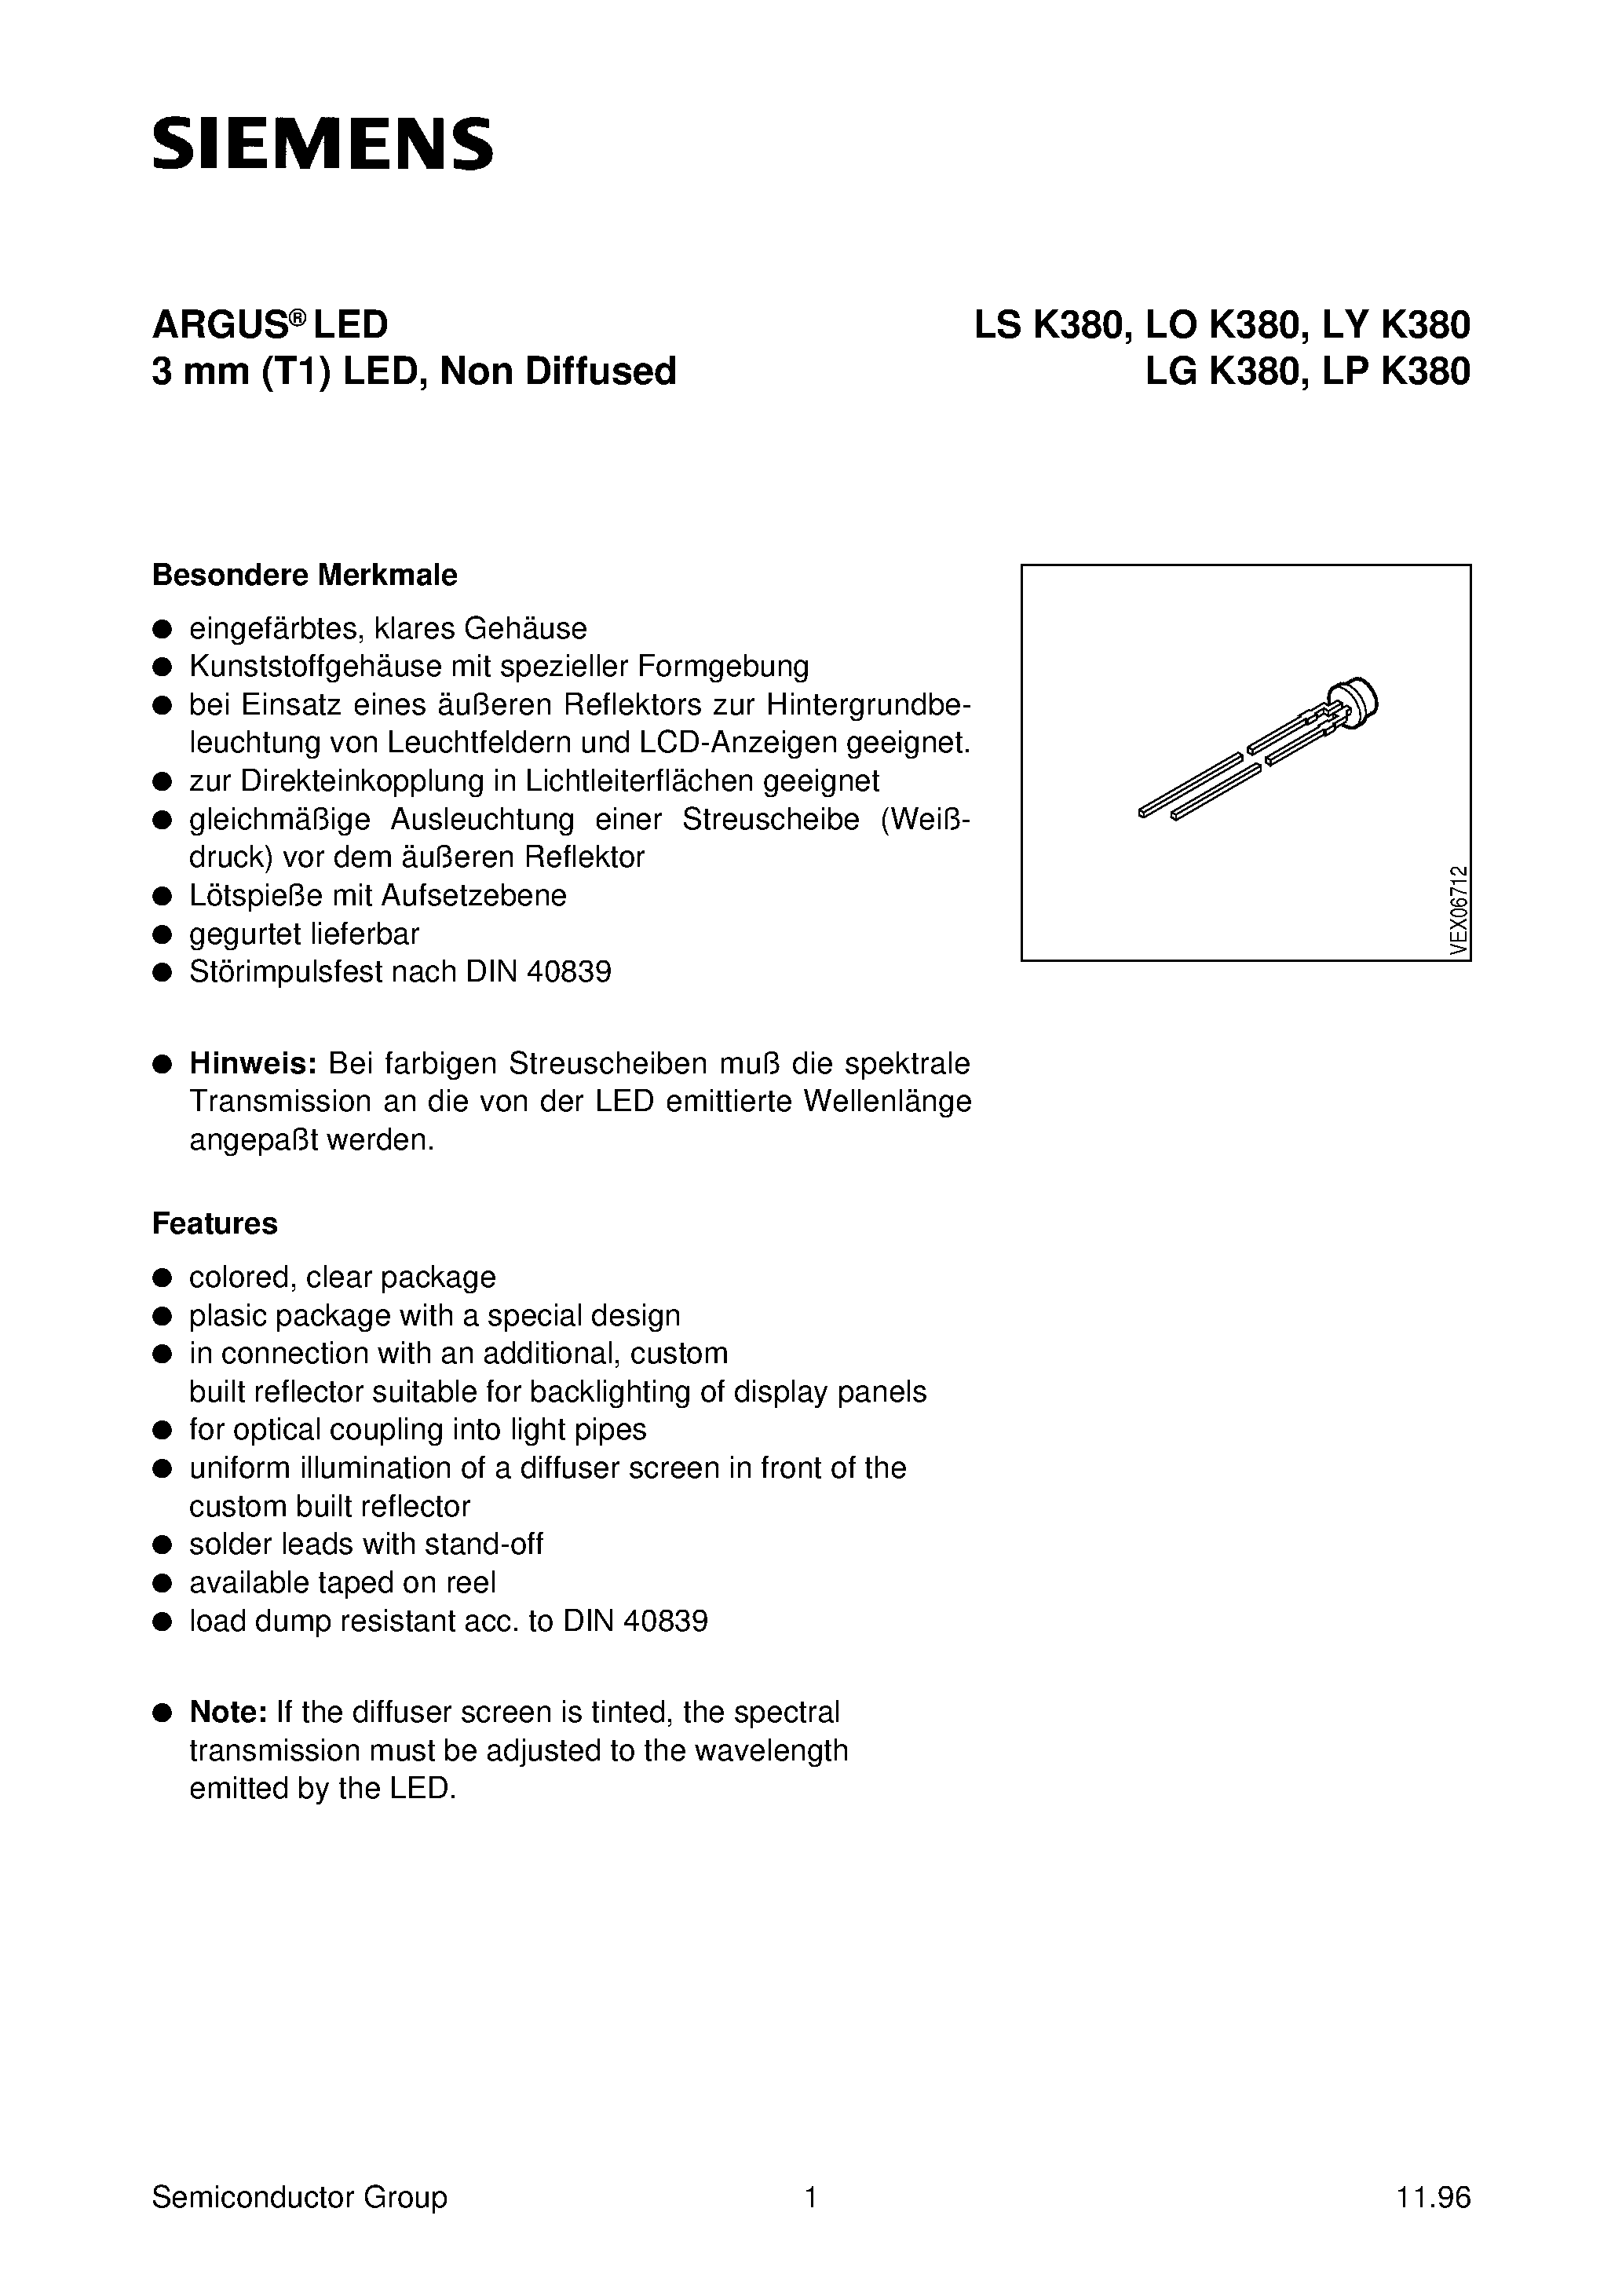 Даташит LYK380-Q - ARGUS LED 3 mm T1 LED/ Non Diffused страница 1